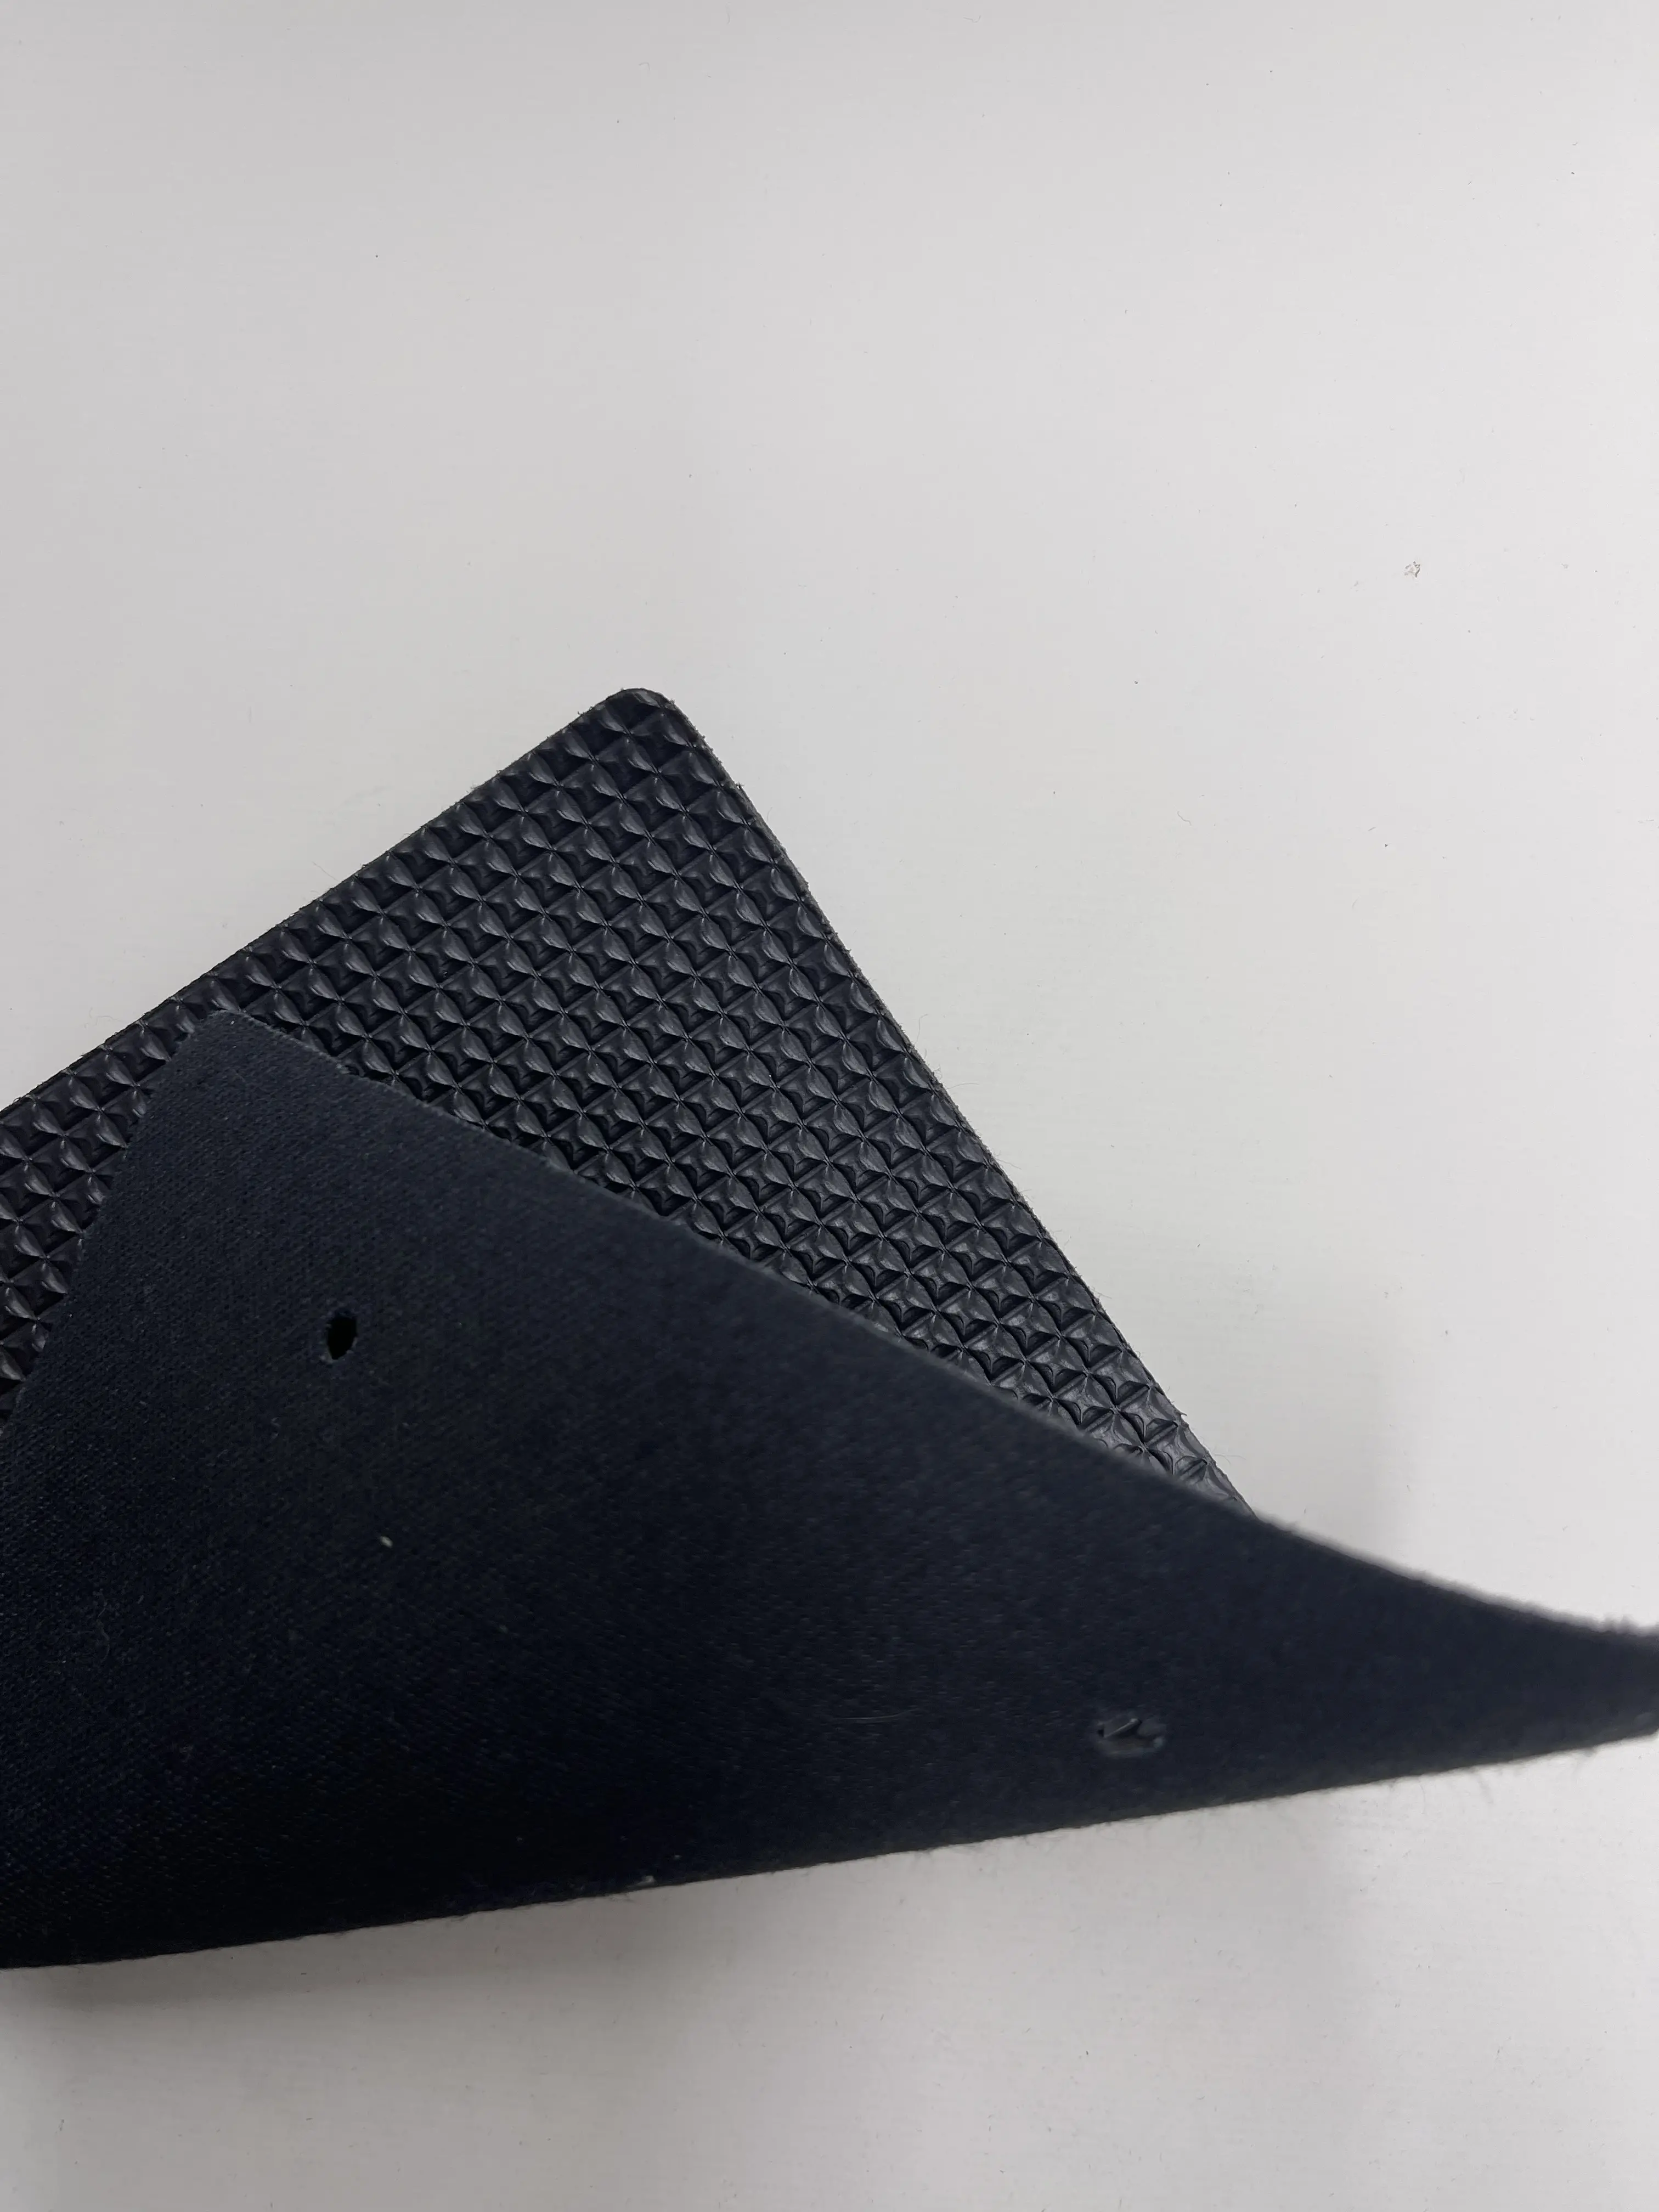 Materiale sandalo in pelle sintetica impermeabile in microfibra